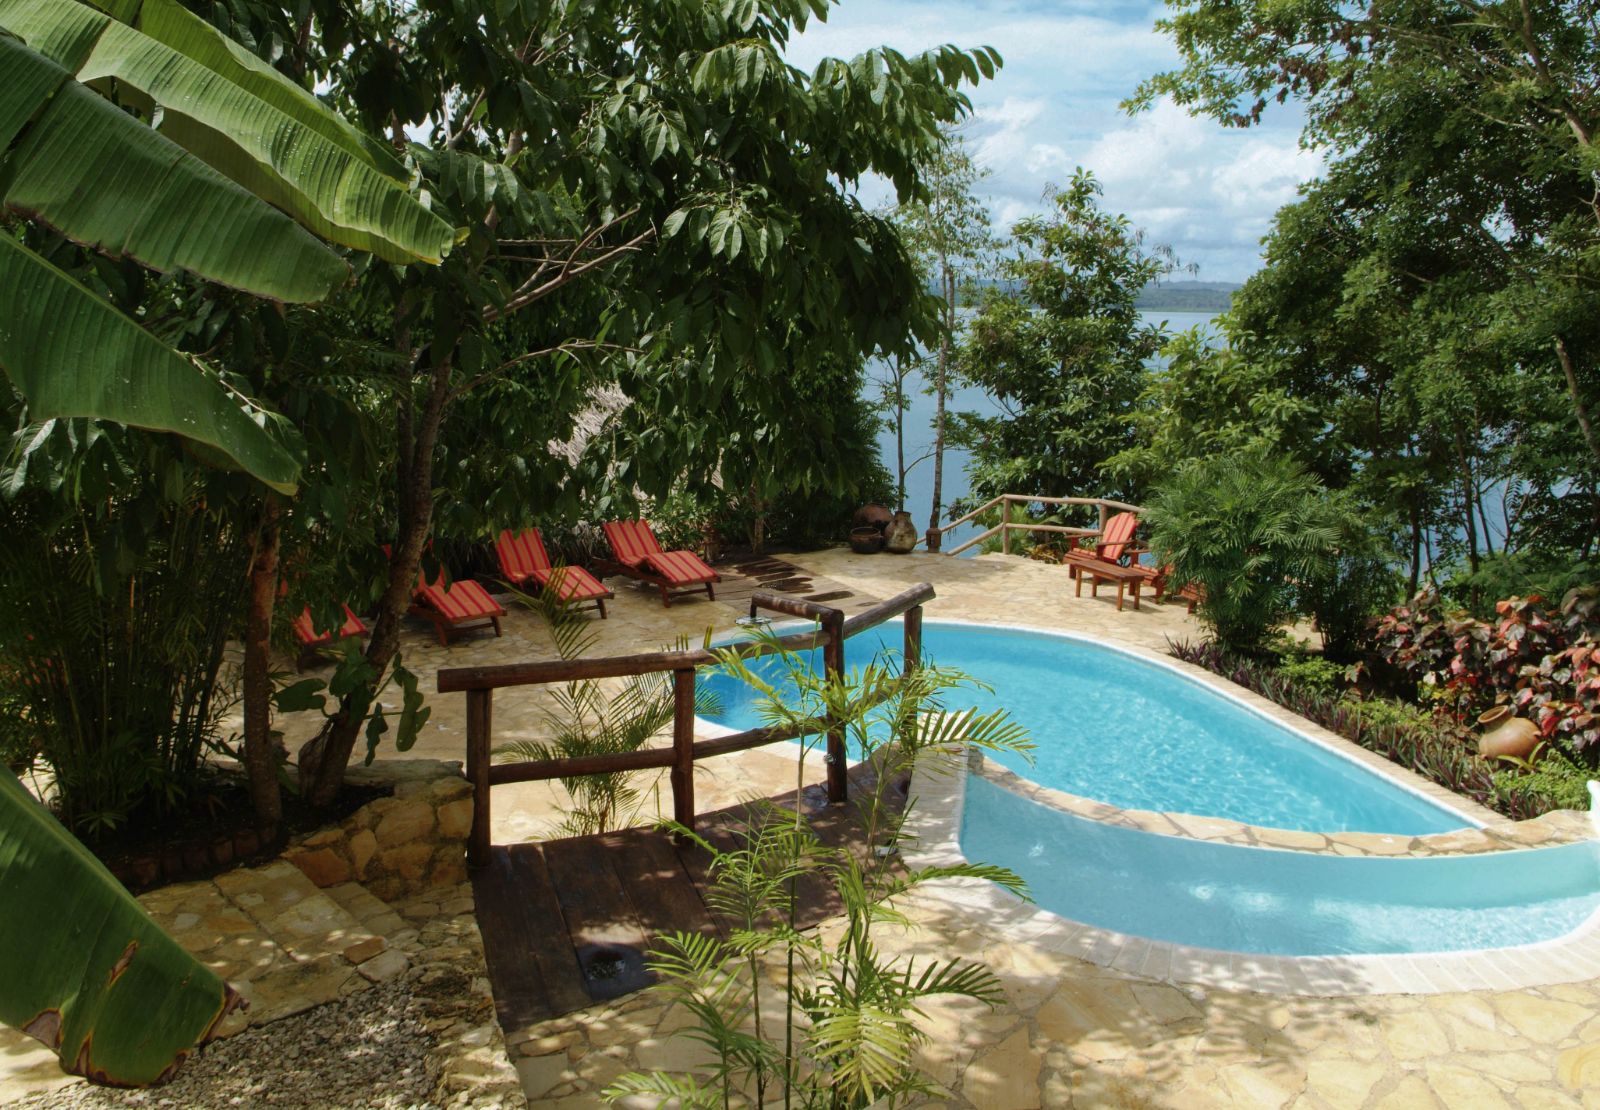 Pool at La Lancha in Guatemala